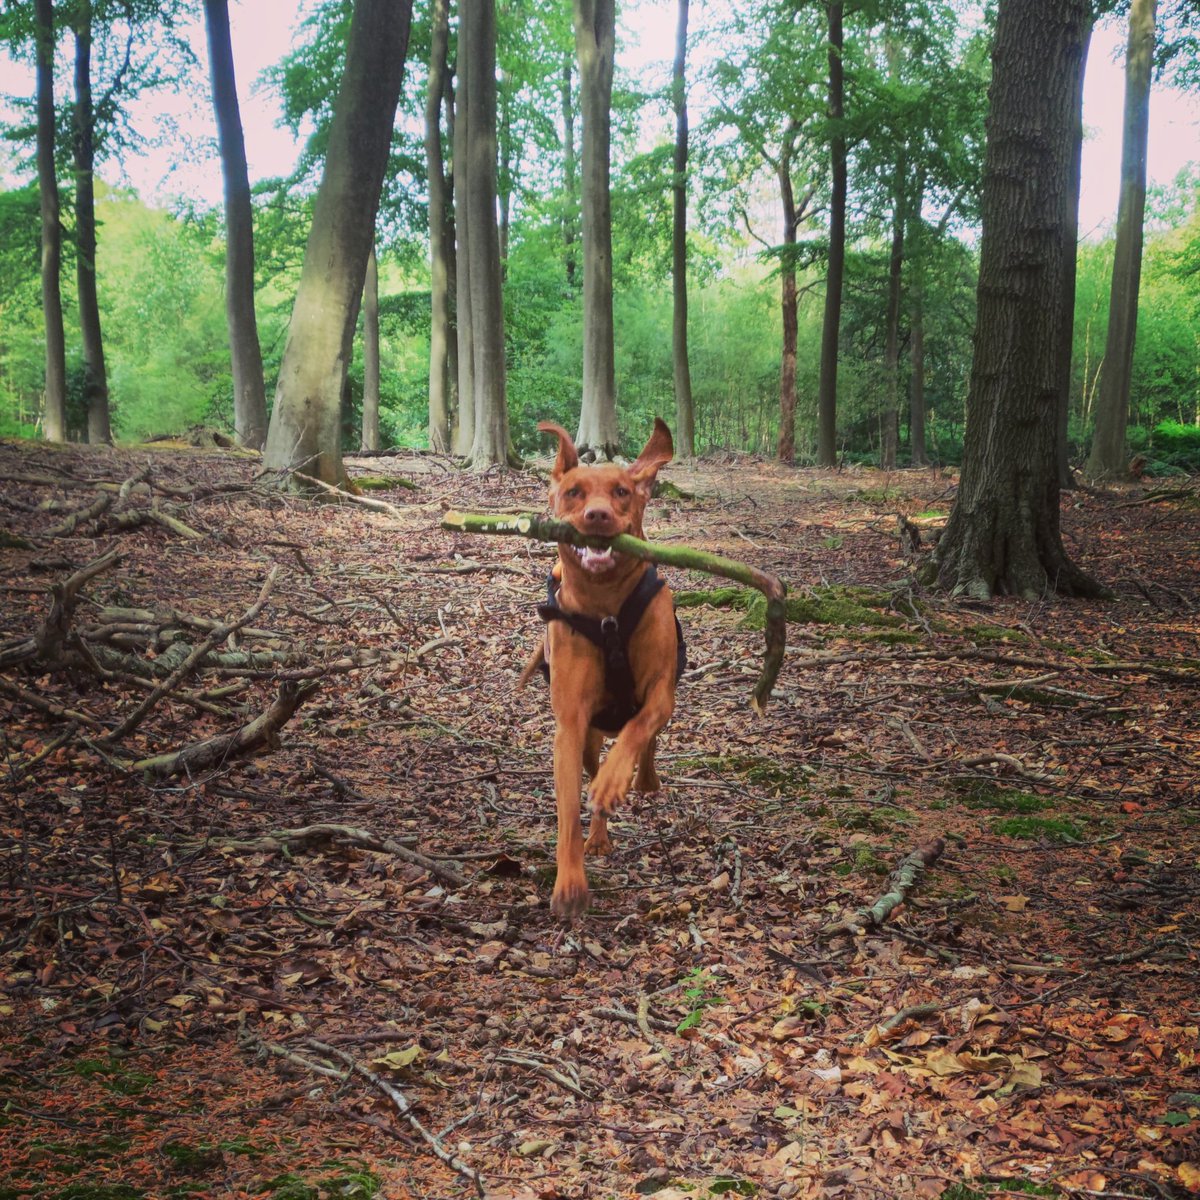 My Stick !!! 
#vizsla #vizslalife #vizslaoftwitter #dogs #dogslife #woodland #burnhambeeches #hungarianvizsla #stick